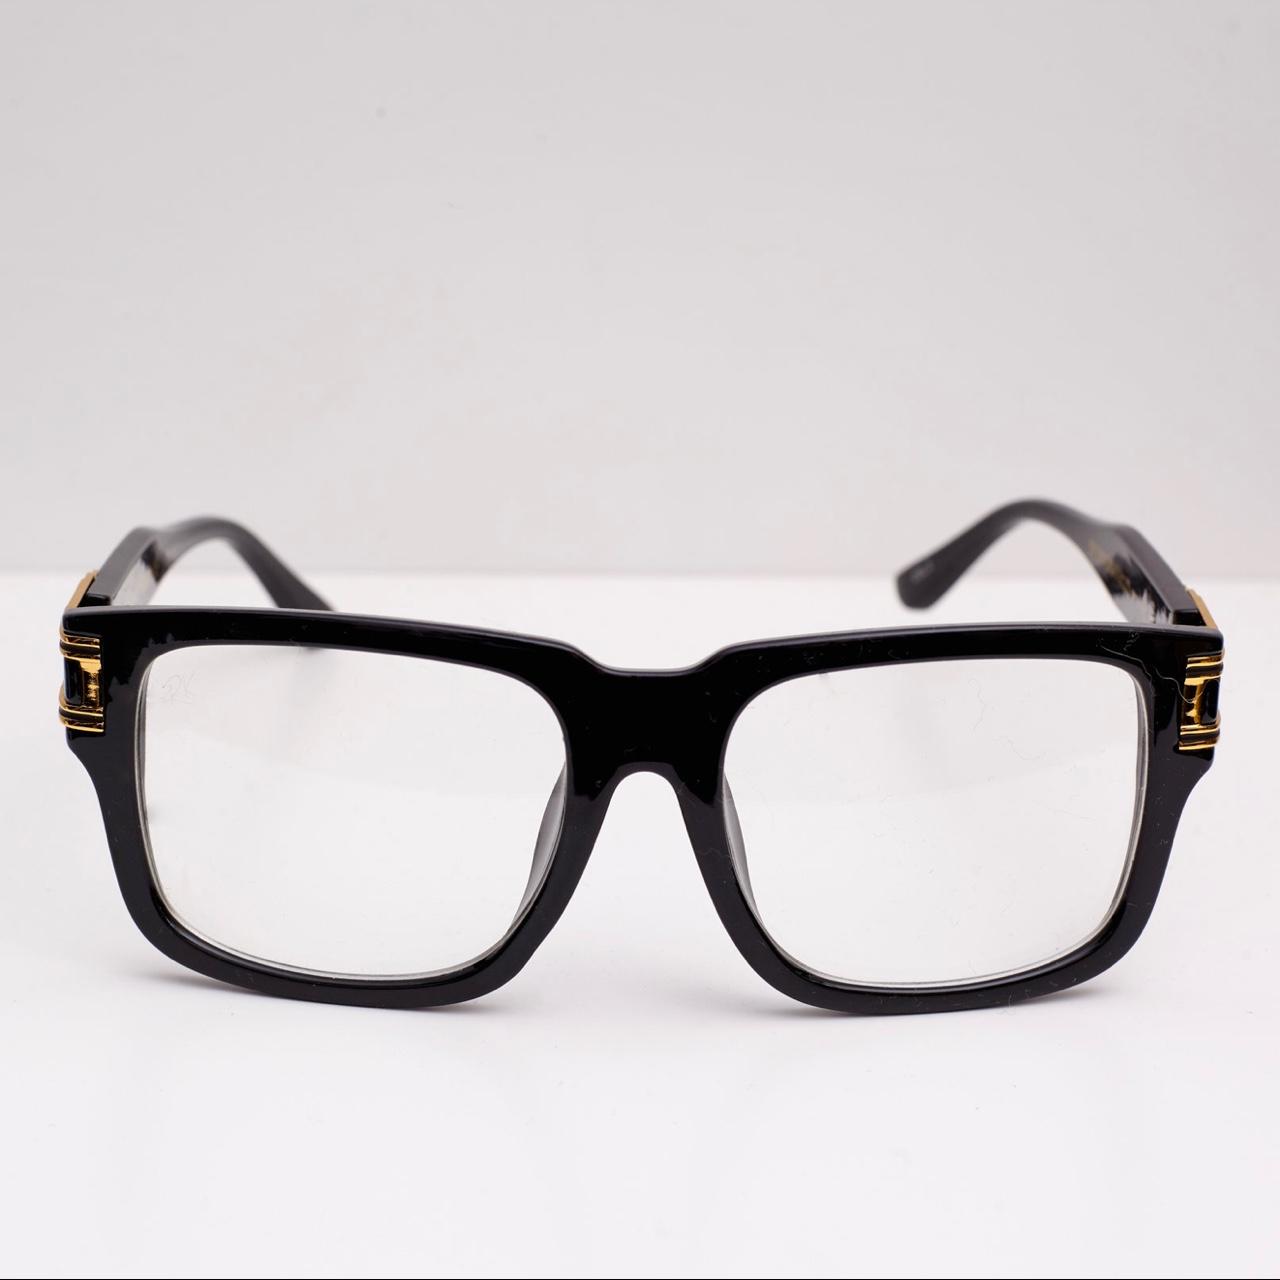 Retro glasses - Black Unisex glasses with gold... - Depop